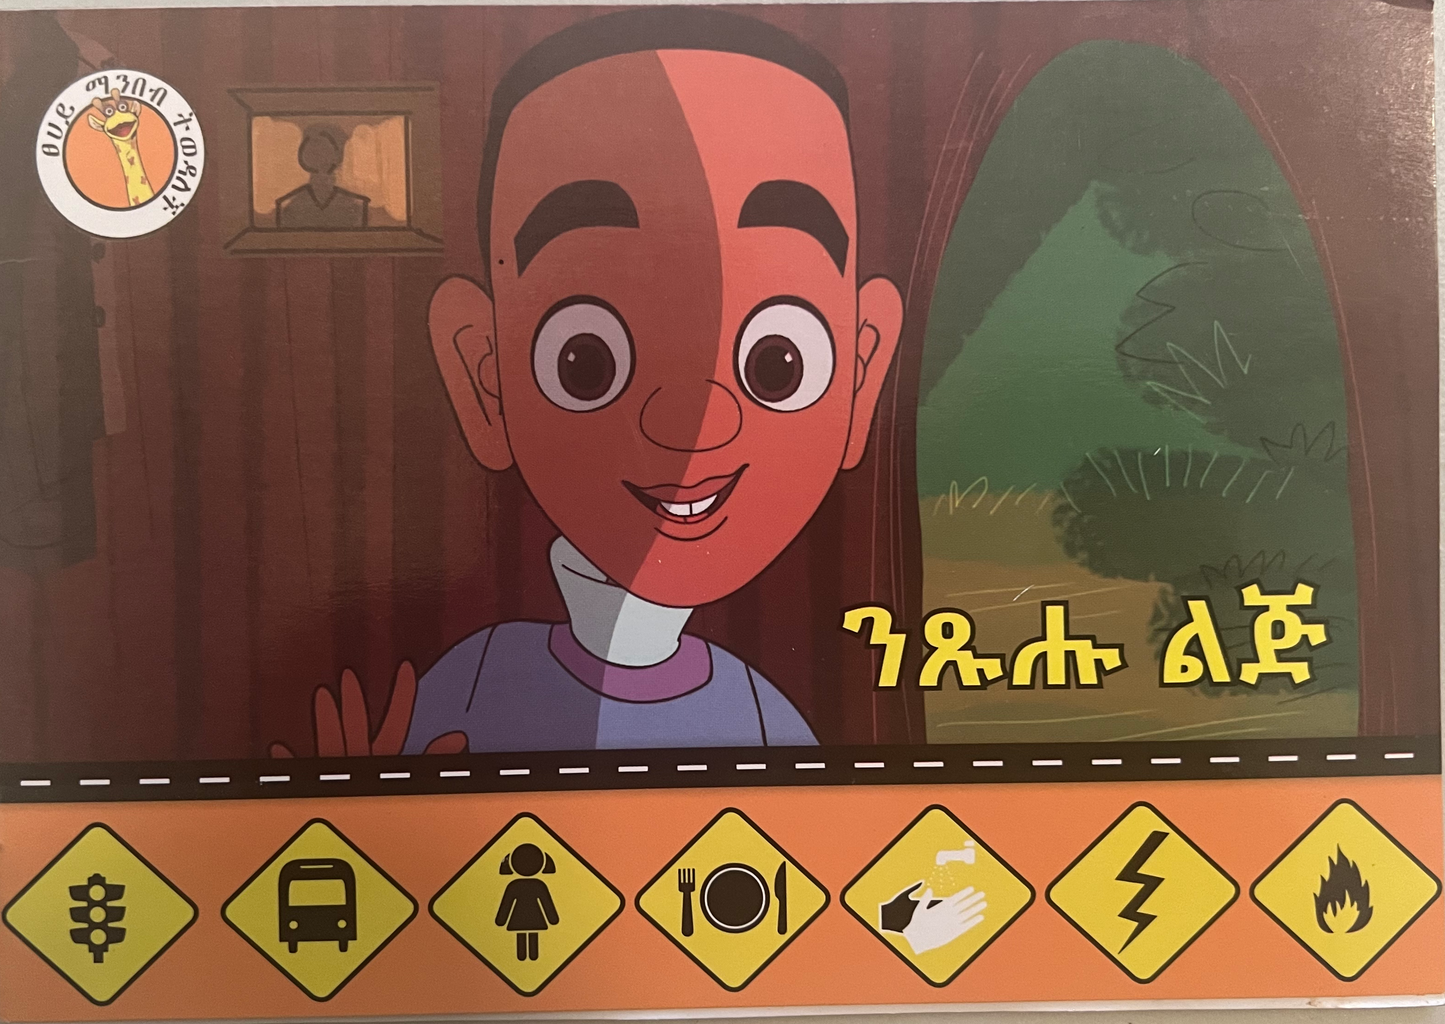 Amharic language textbook and storybook 36